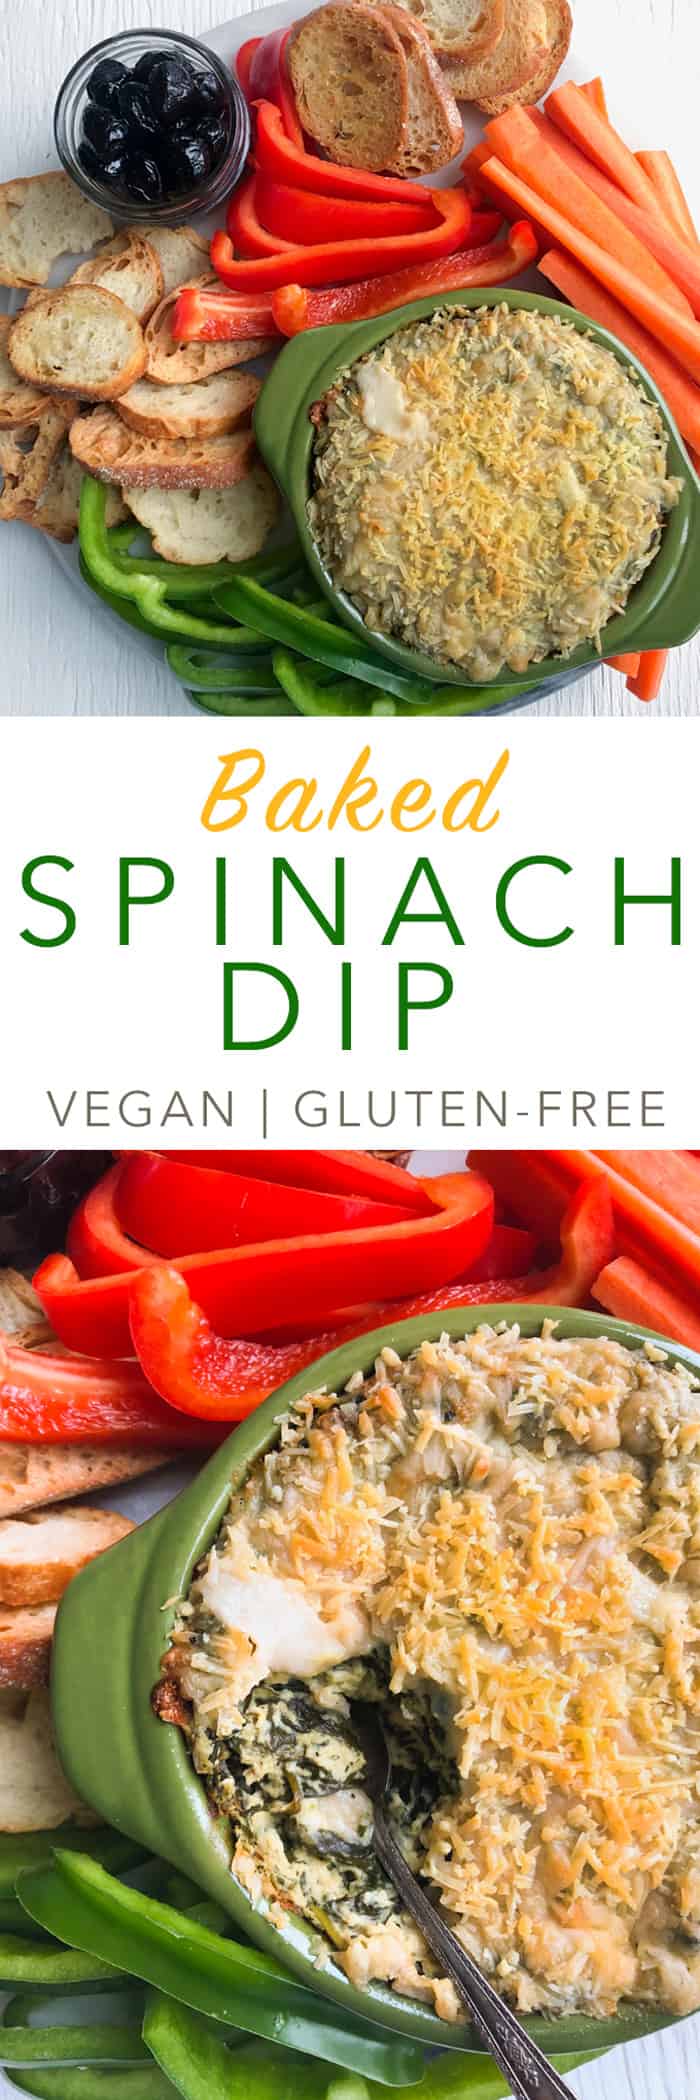 Spinach Dip Recipe Pinterest